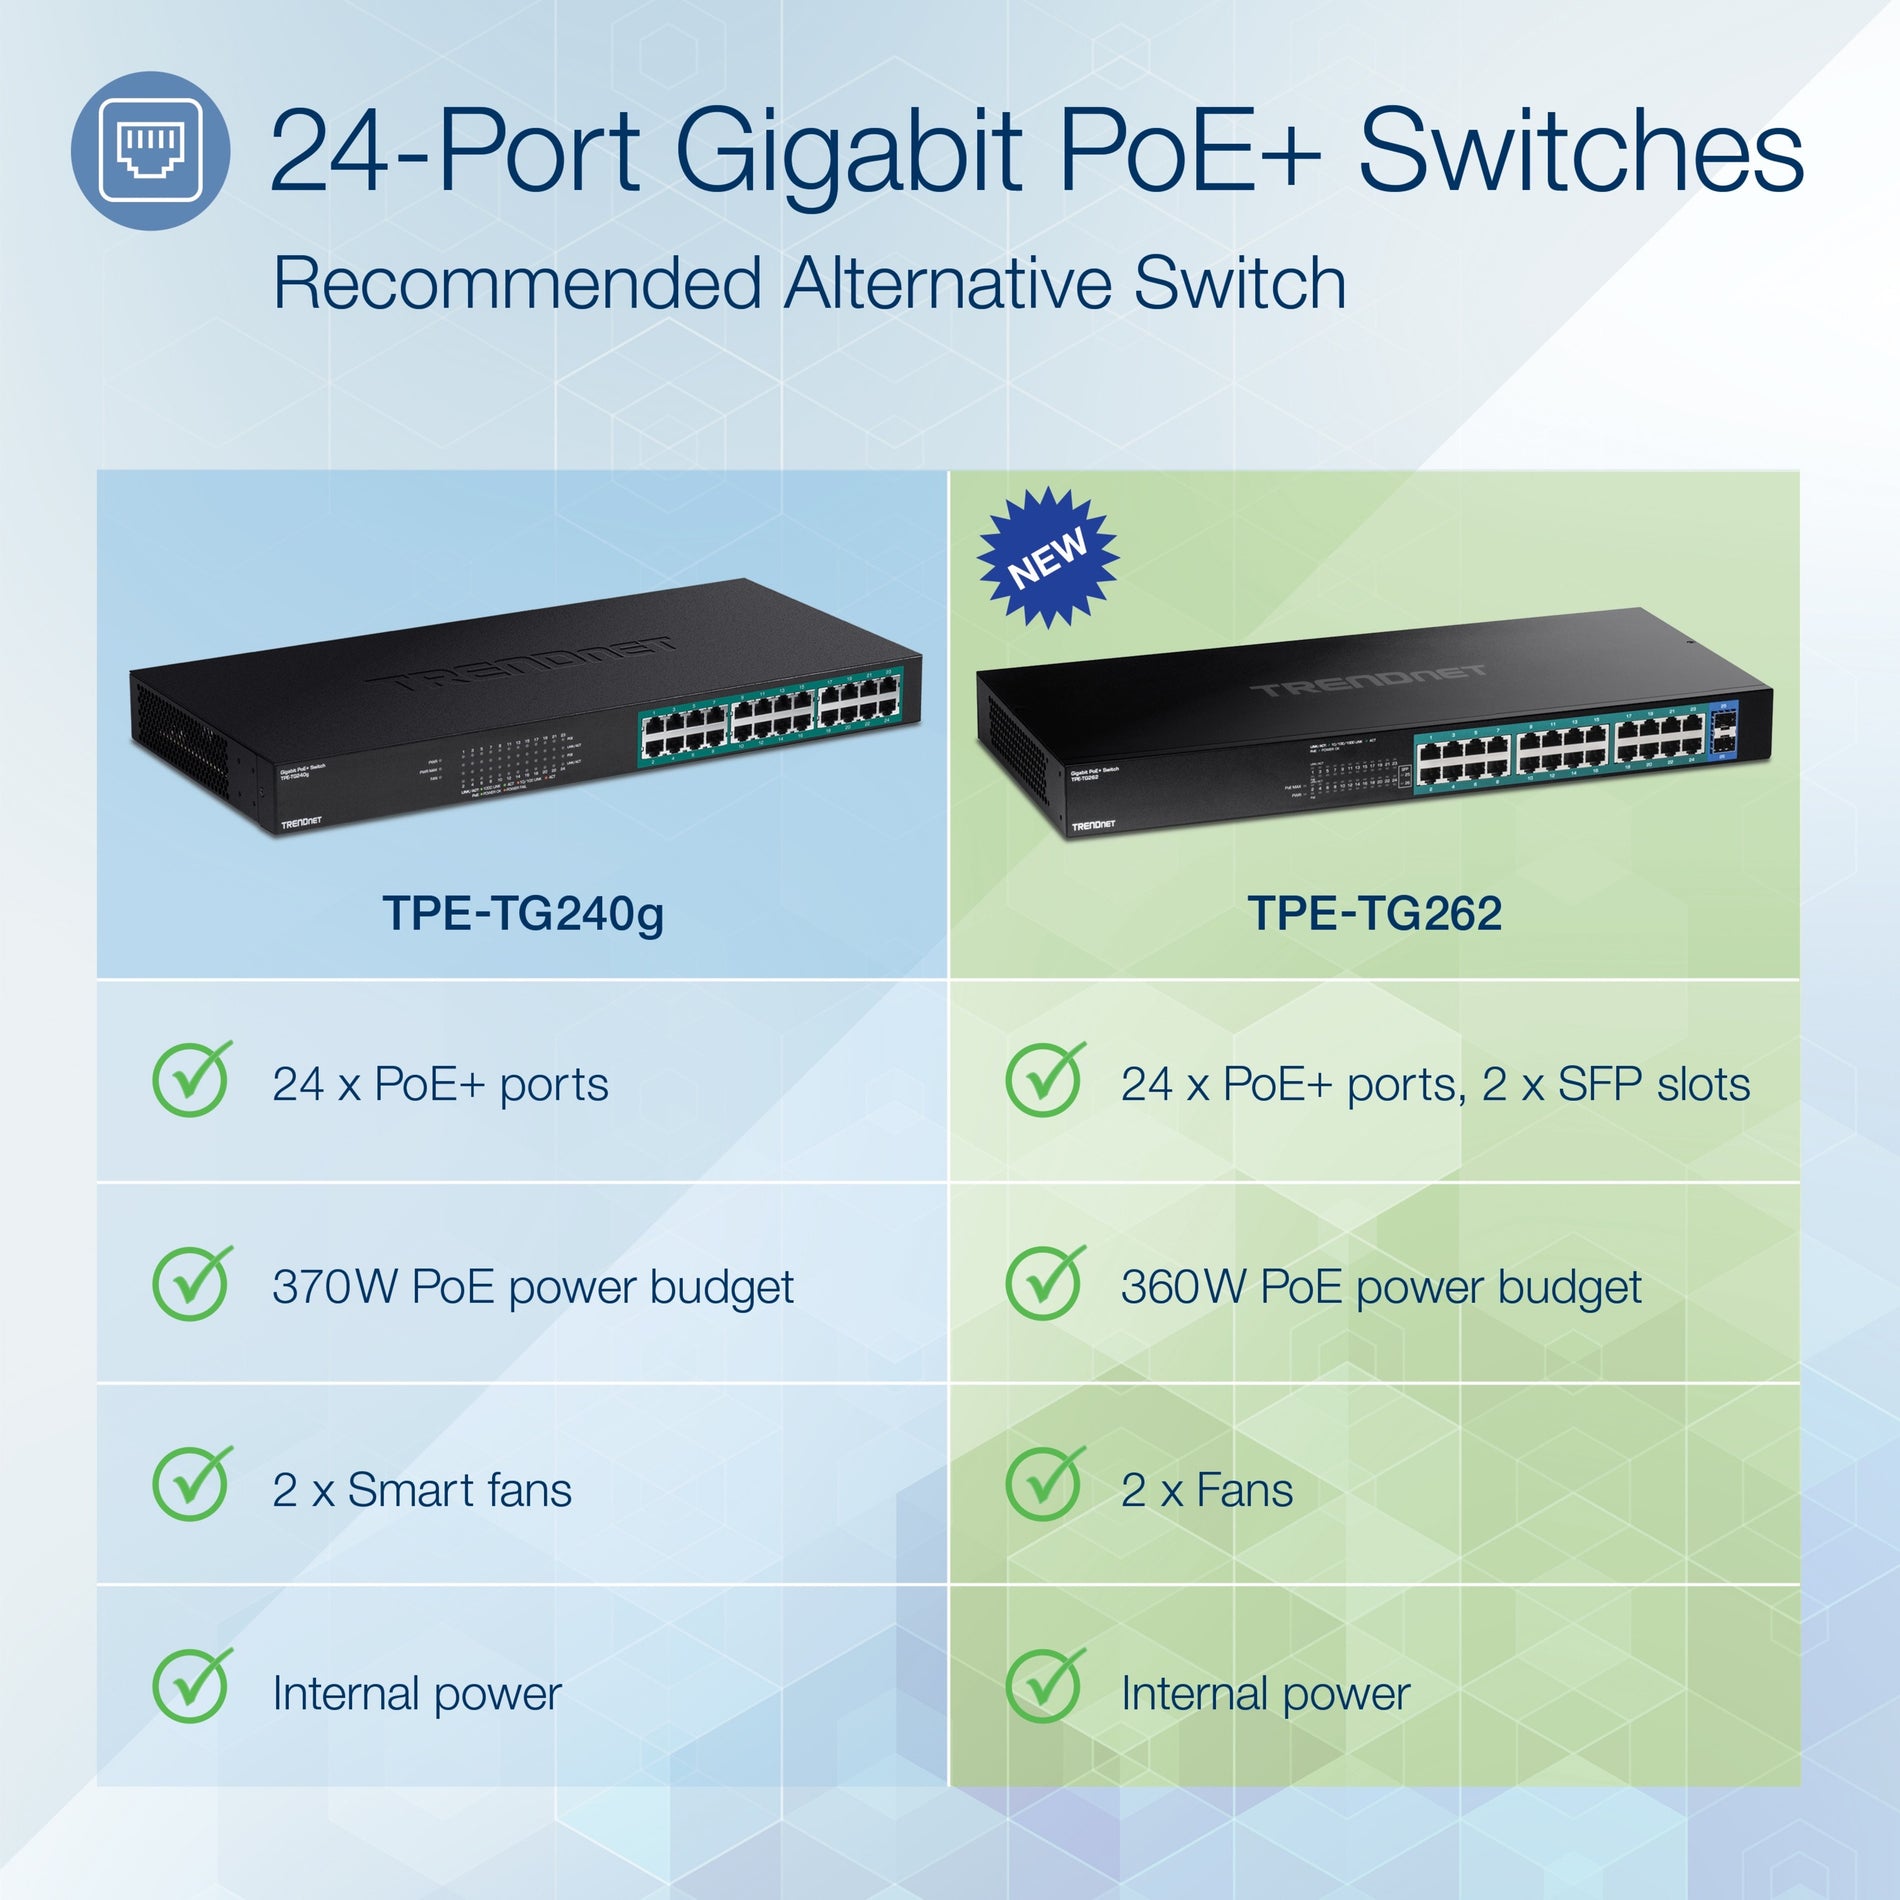 TRENDnet TPE-TG262 26-Port Gigabit PoE+ Switch, 24 x 30W PoE+ Ports, 2 Gigabit SFP Slots, 380W PoE Budget